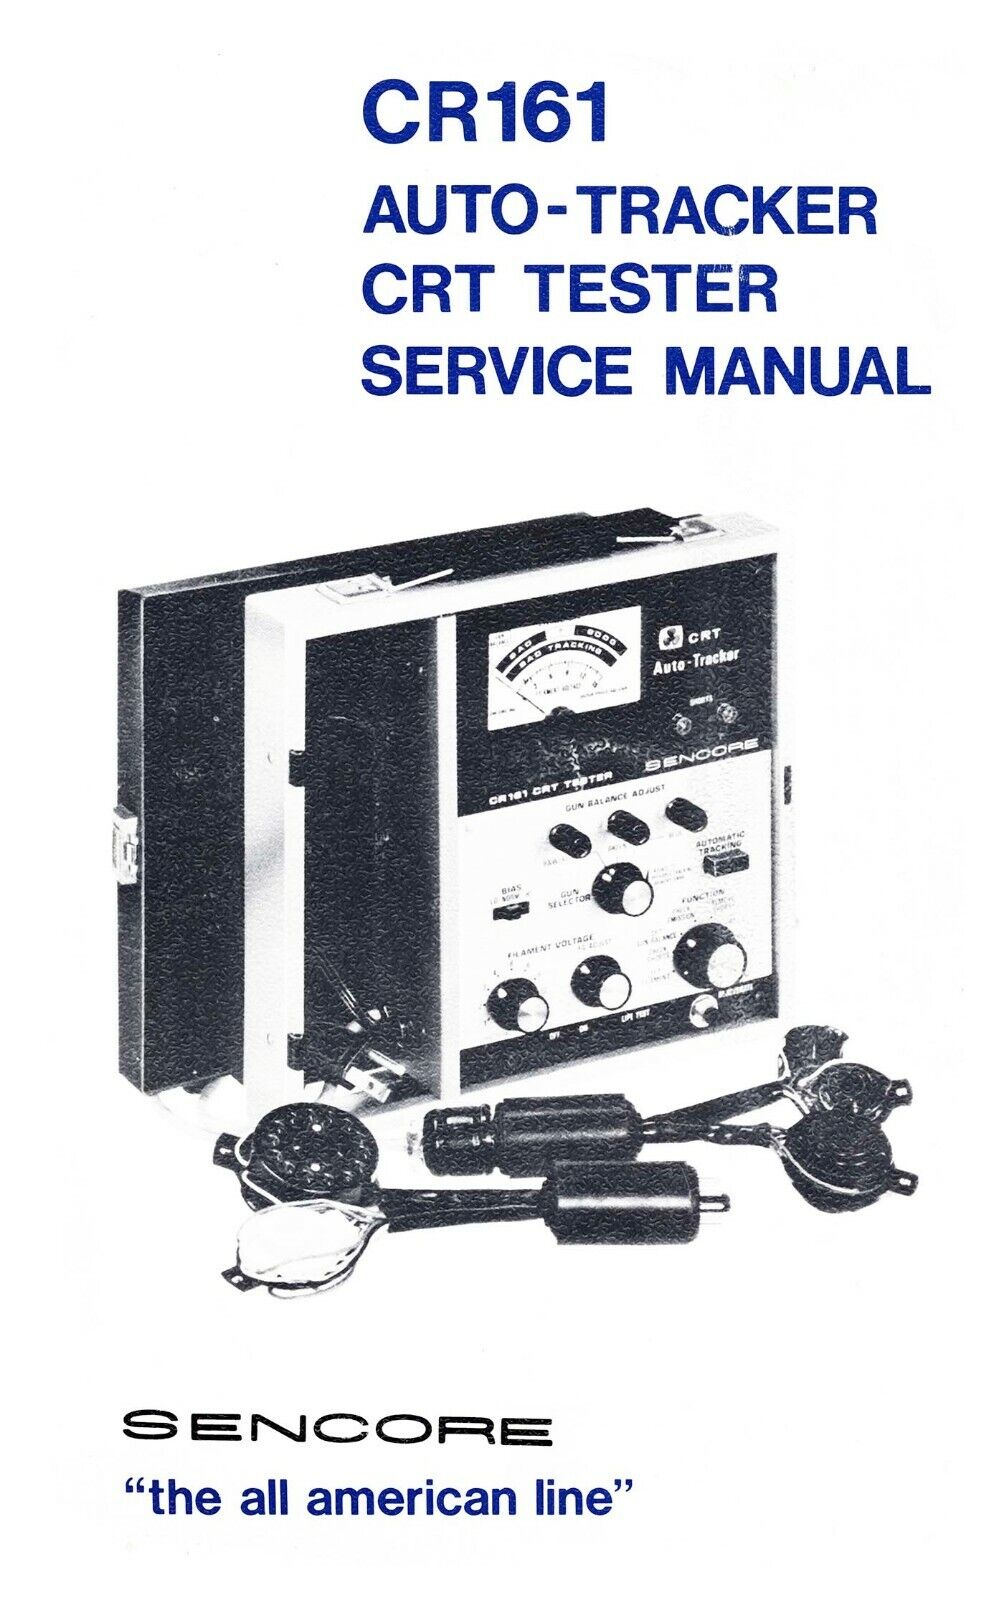 Sencore CR161 Auto-Tracker Cathode Ray Tube Tester manual